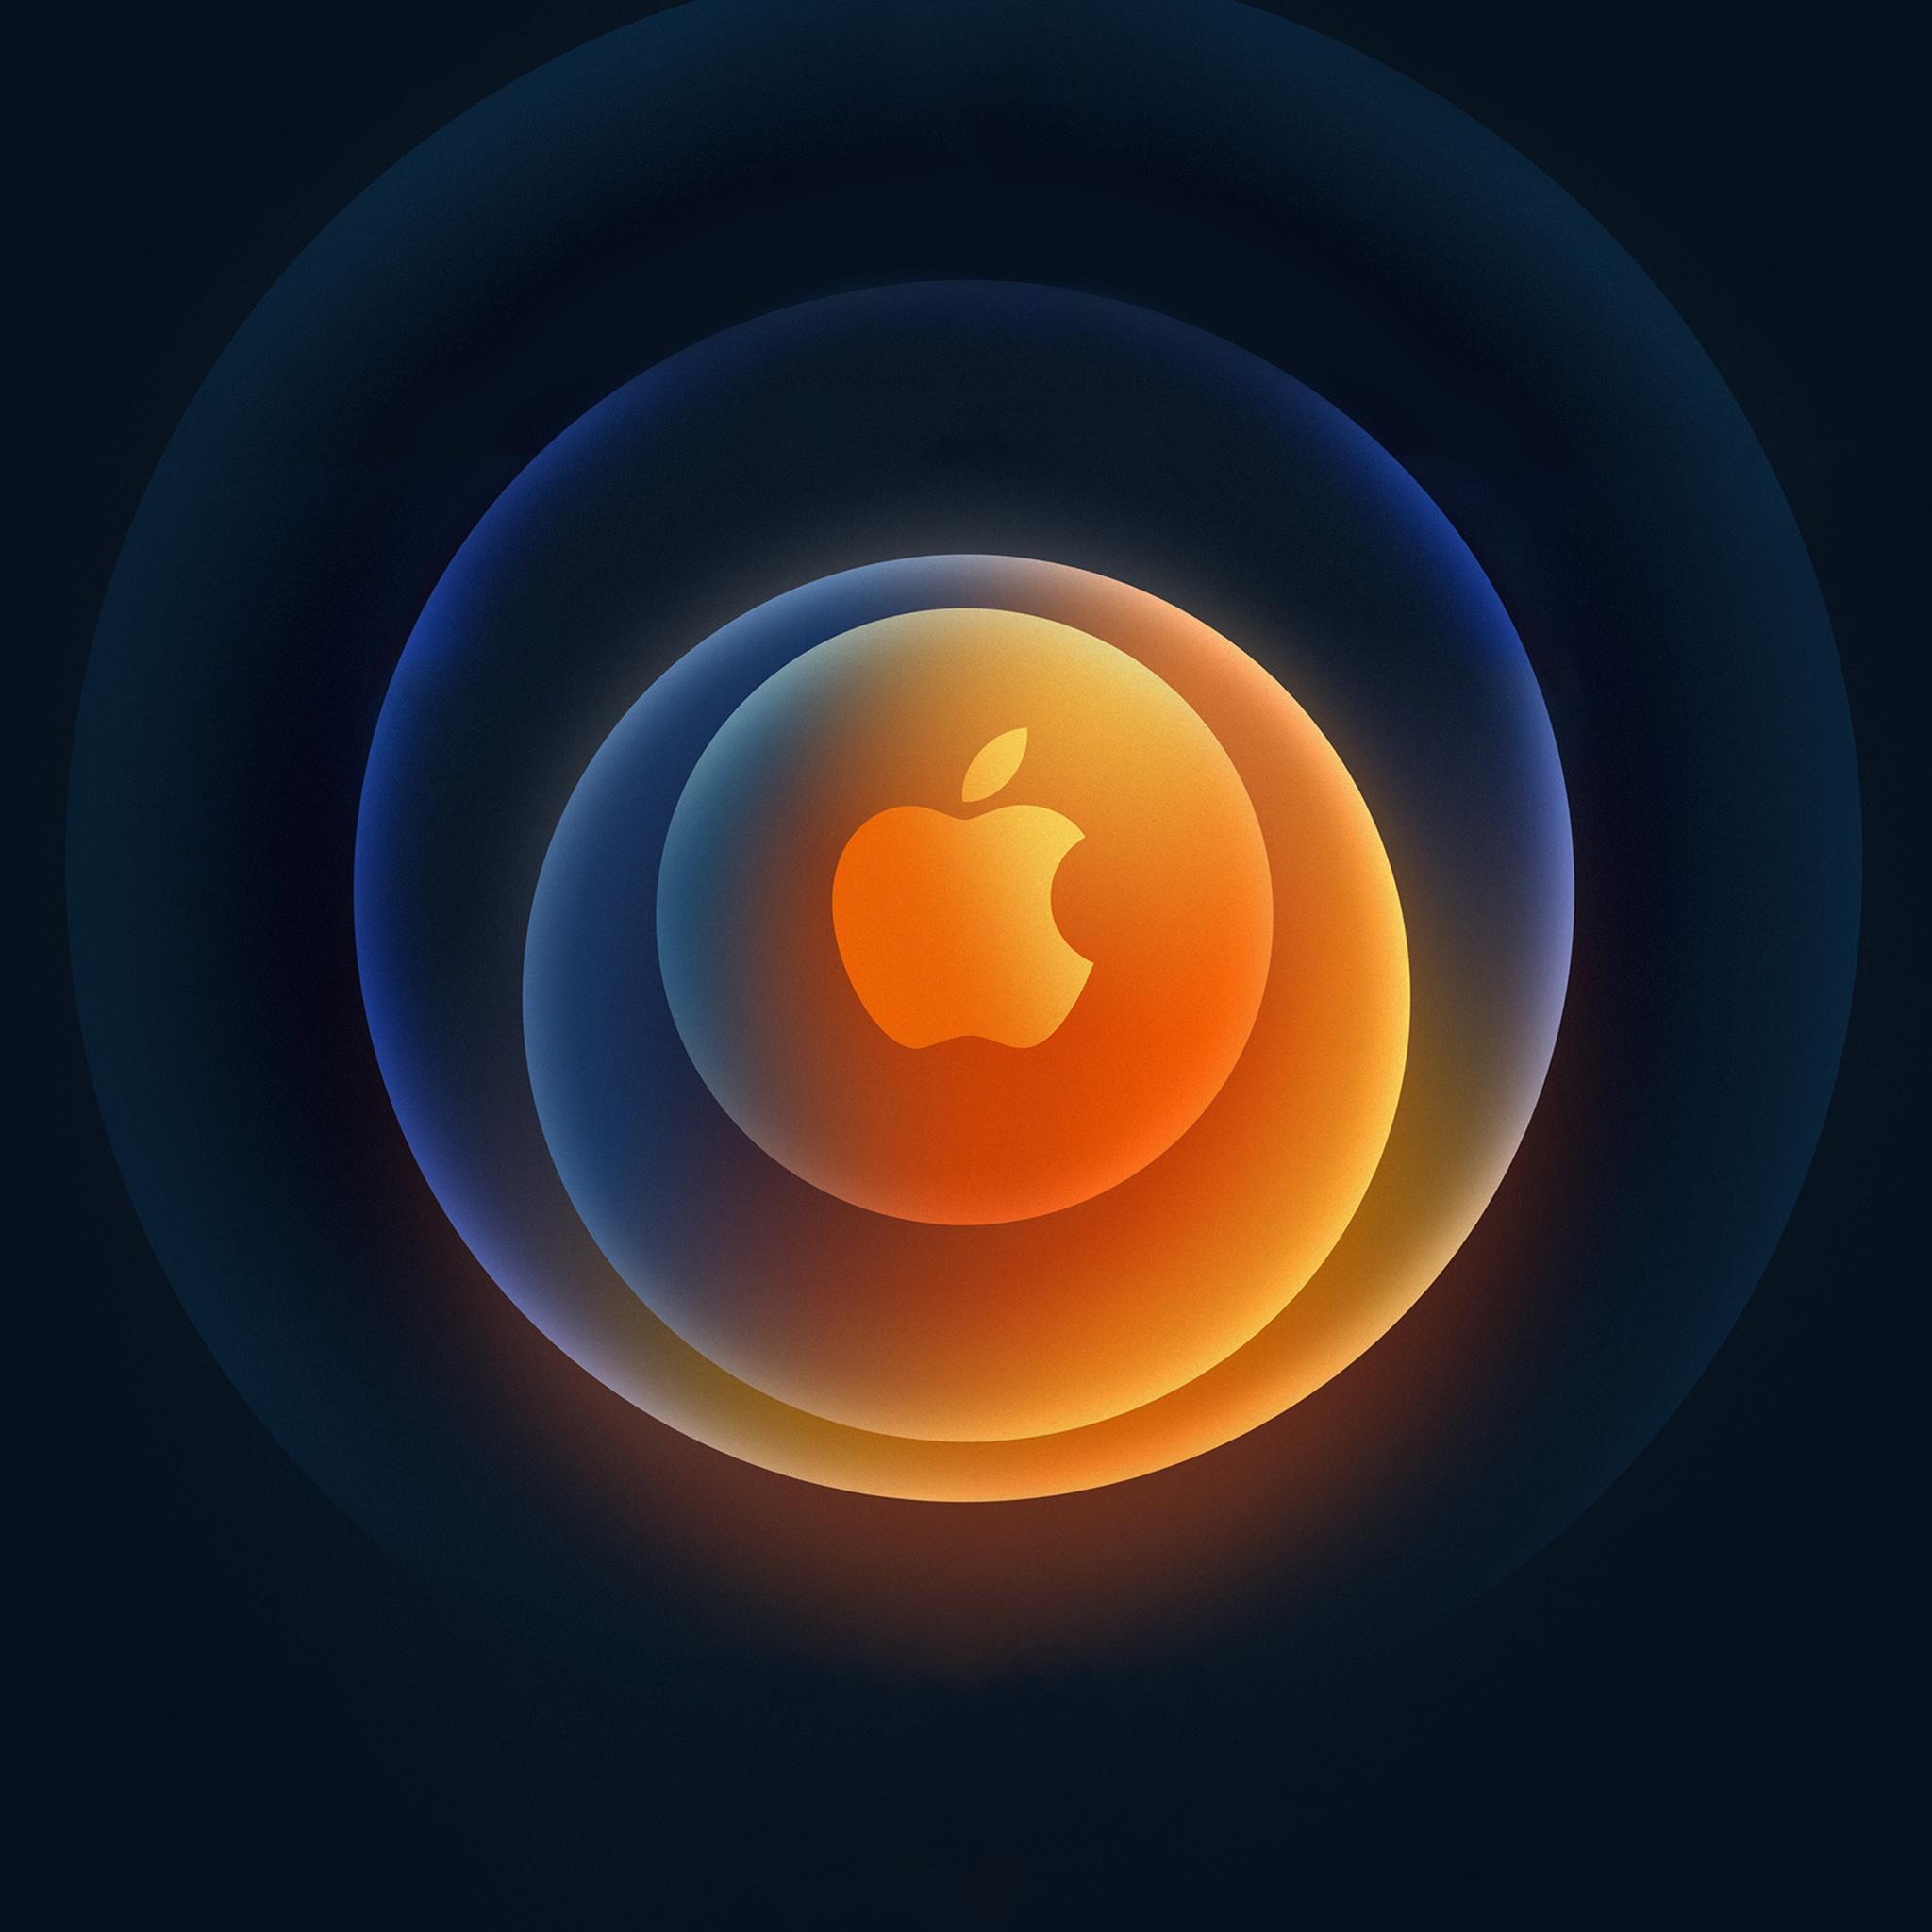 iPad Pro Apple Logo Wallpapers - Top Free iPad Pro Apple Logo ...